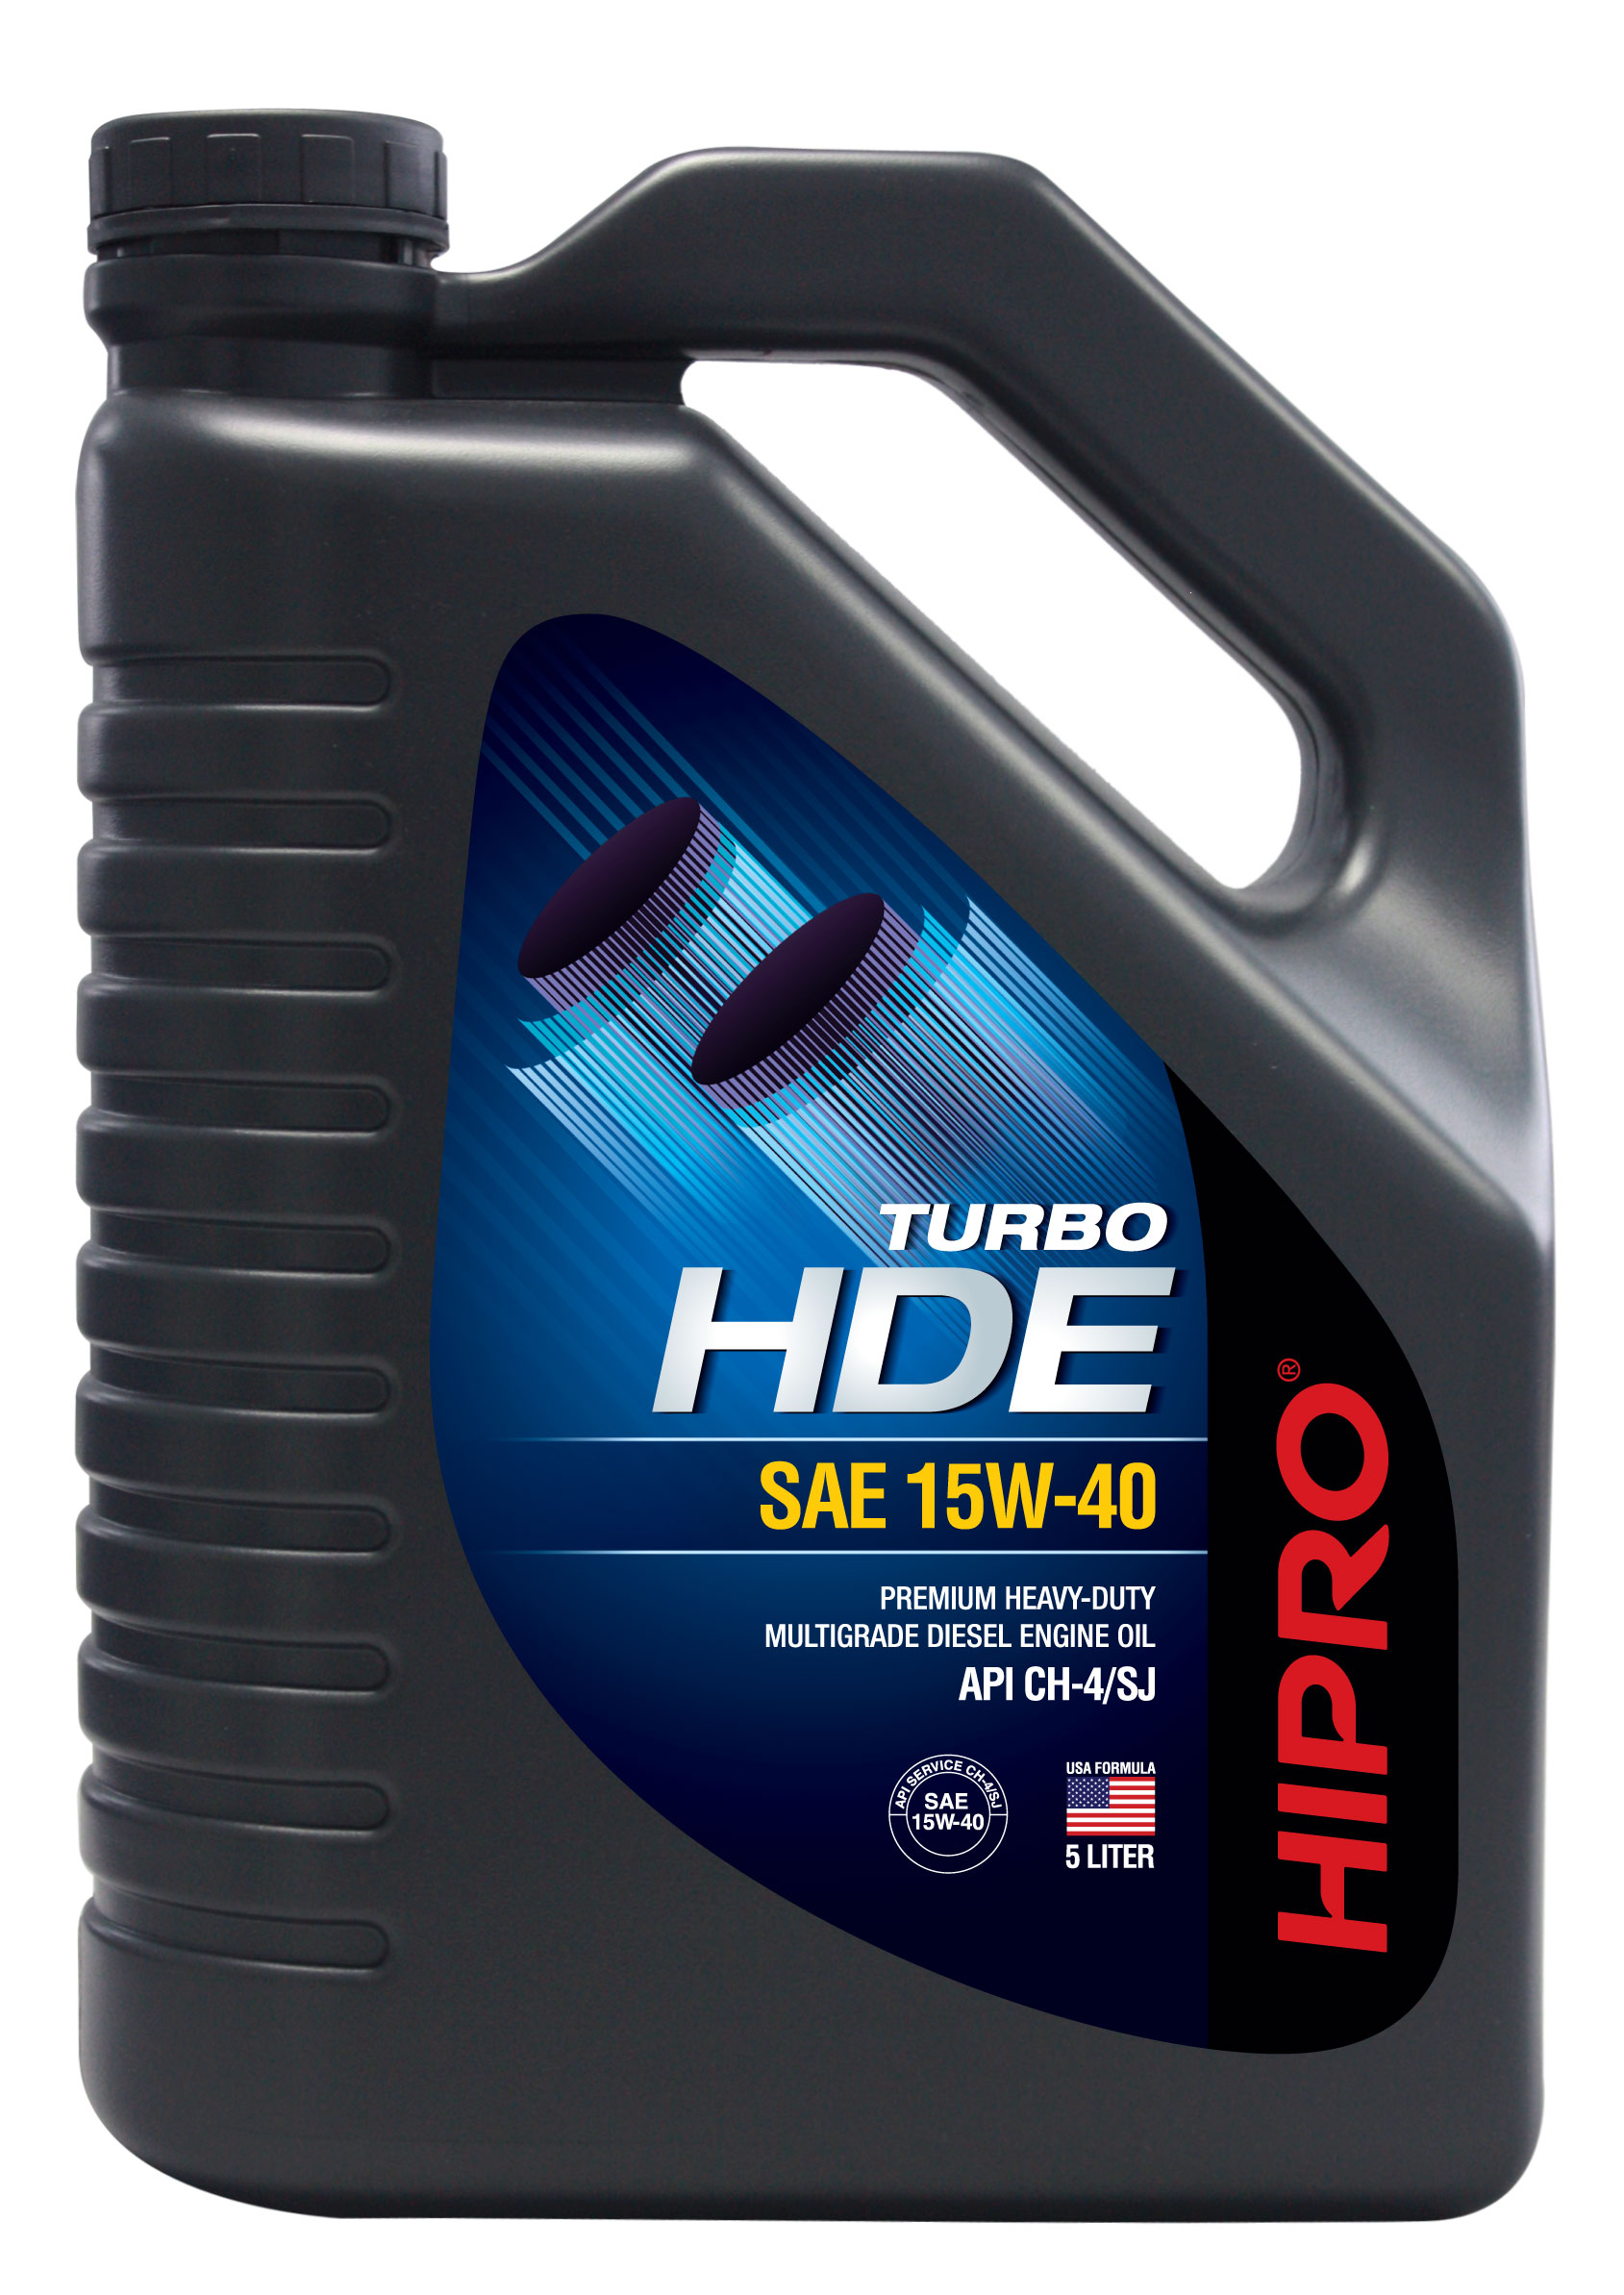 HIPRO HDE SAE 15W-40 and SAE 20W-50 API CH-4/SJ